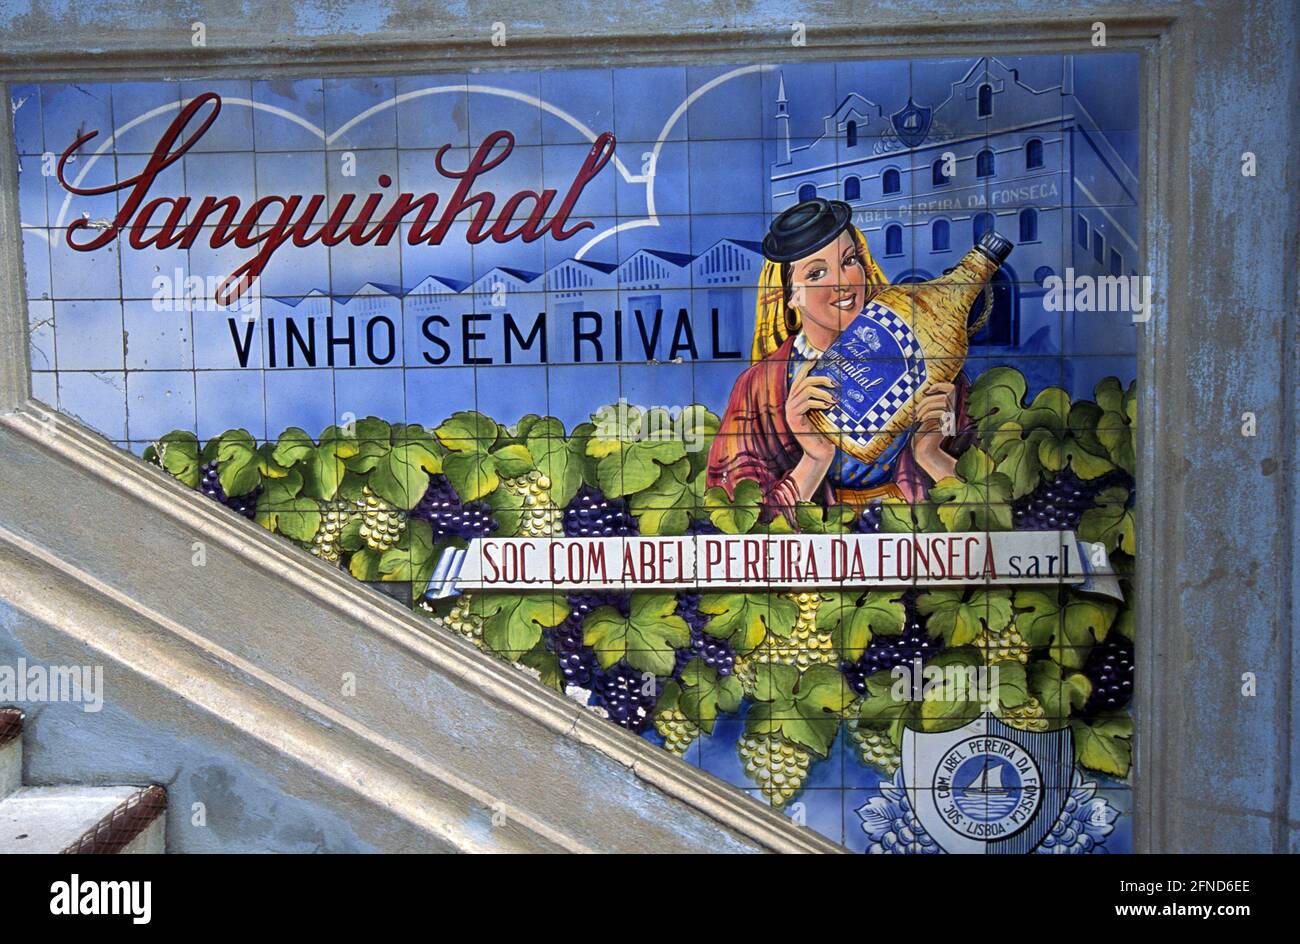 Sanguinhal vinho Sem Rival tile advertisement in Mercado do Bolhão, Porto,  Portugal Stock Photo - Alamy